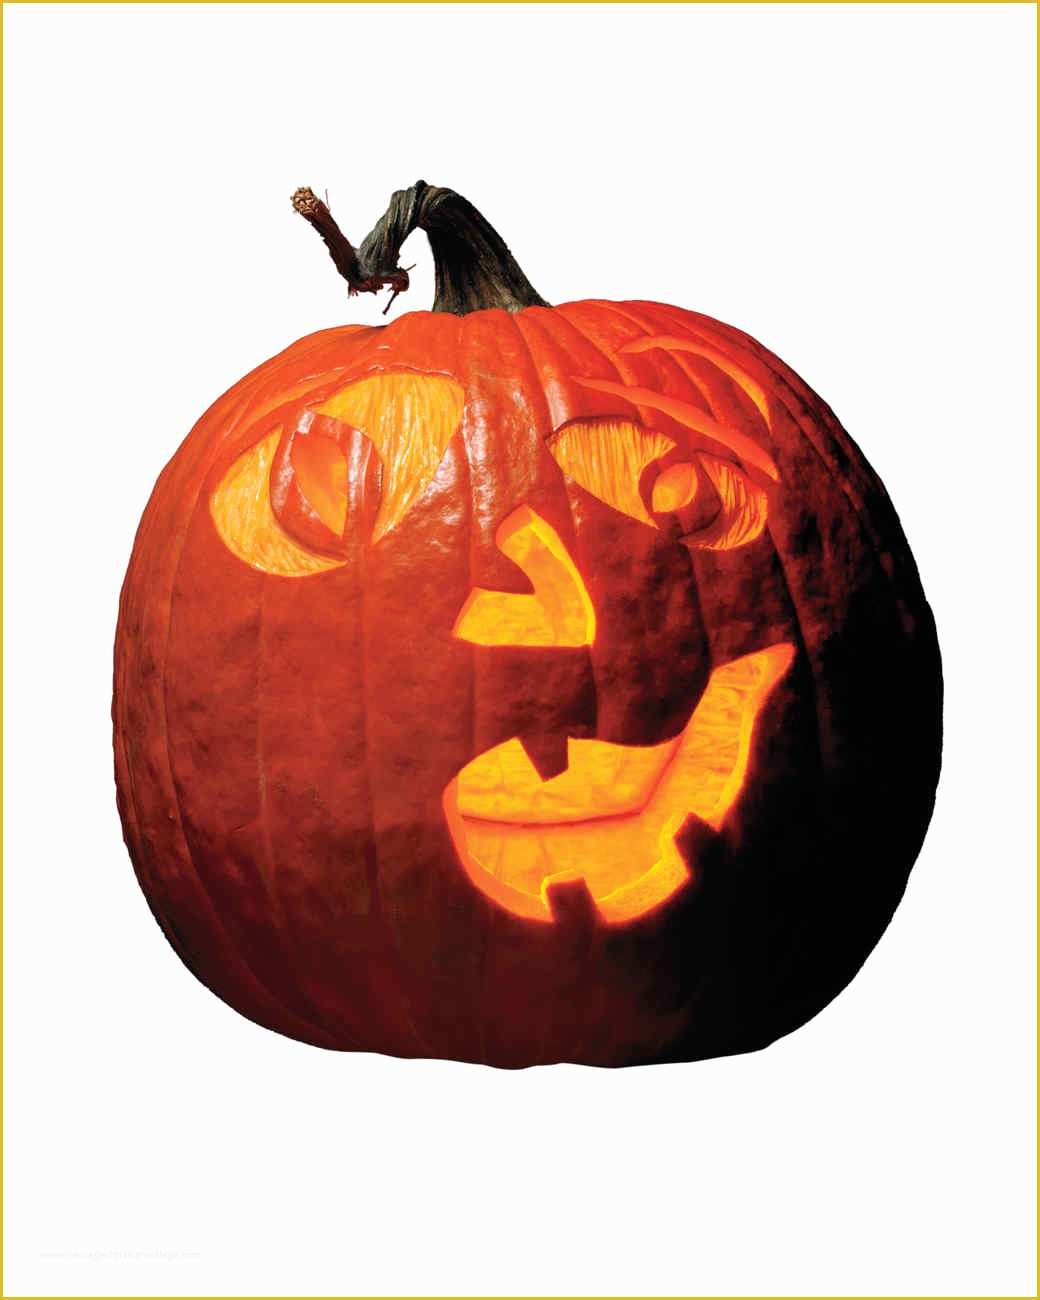 Pumpkin Carving Ideas Templates Free Of Halloween Pumpkin Carving ...